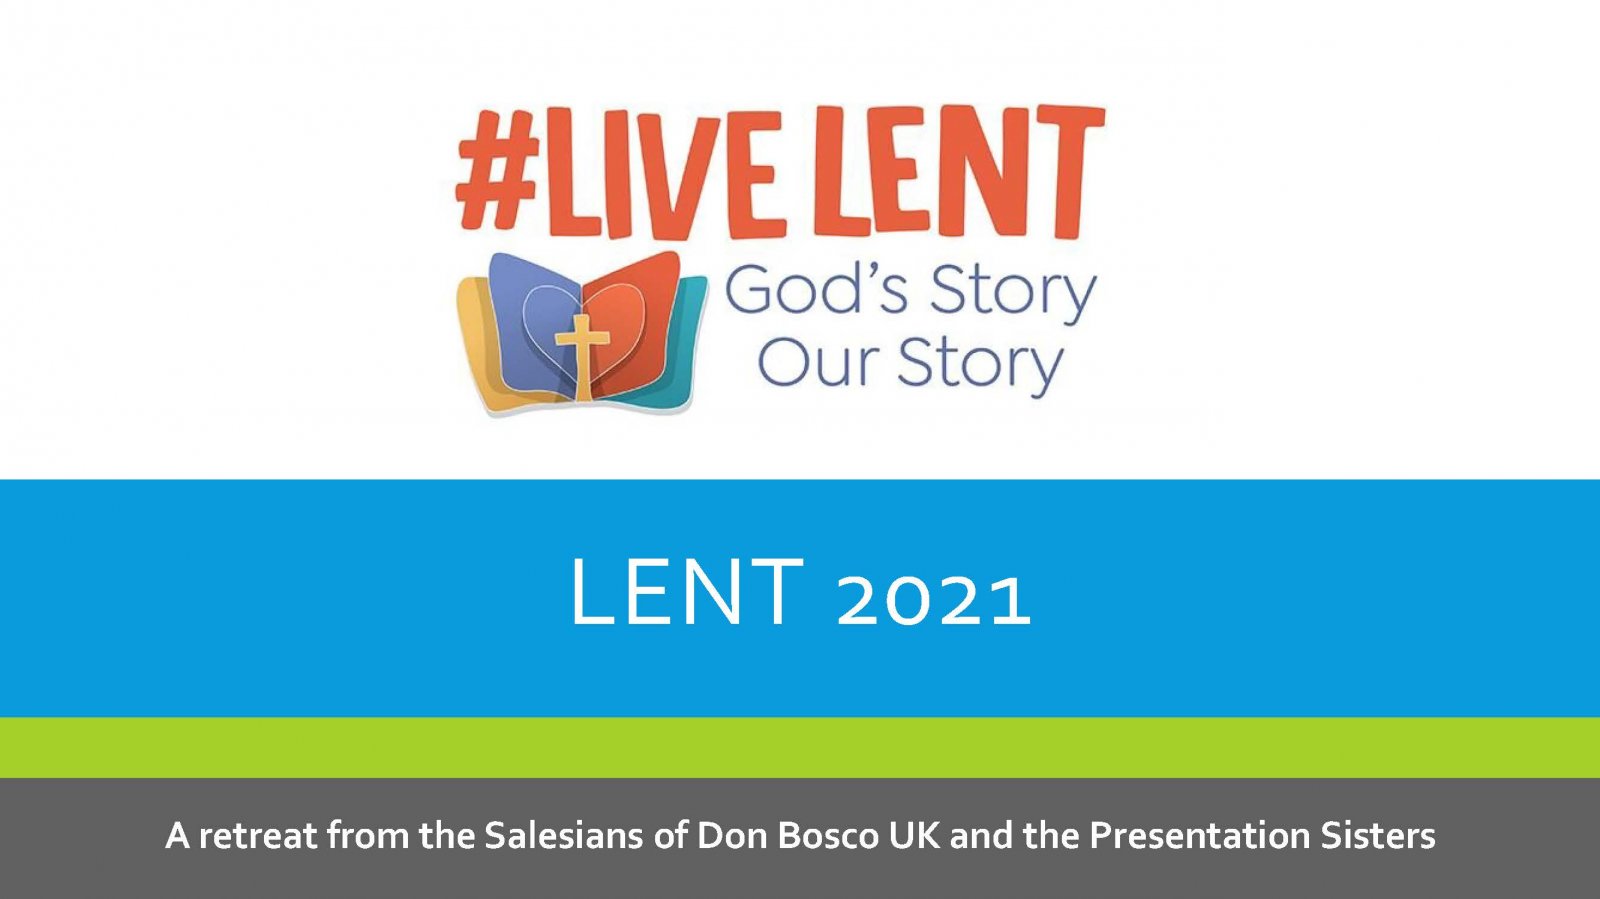 Online retreatants shared their Lenten stories